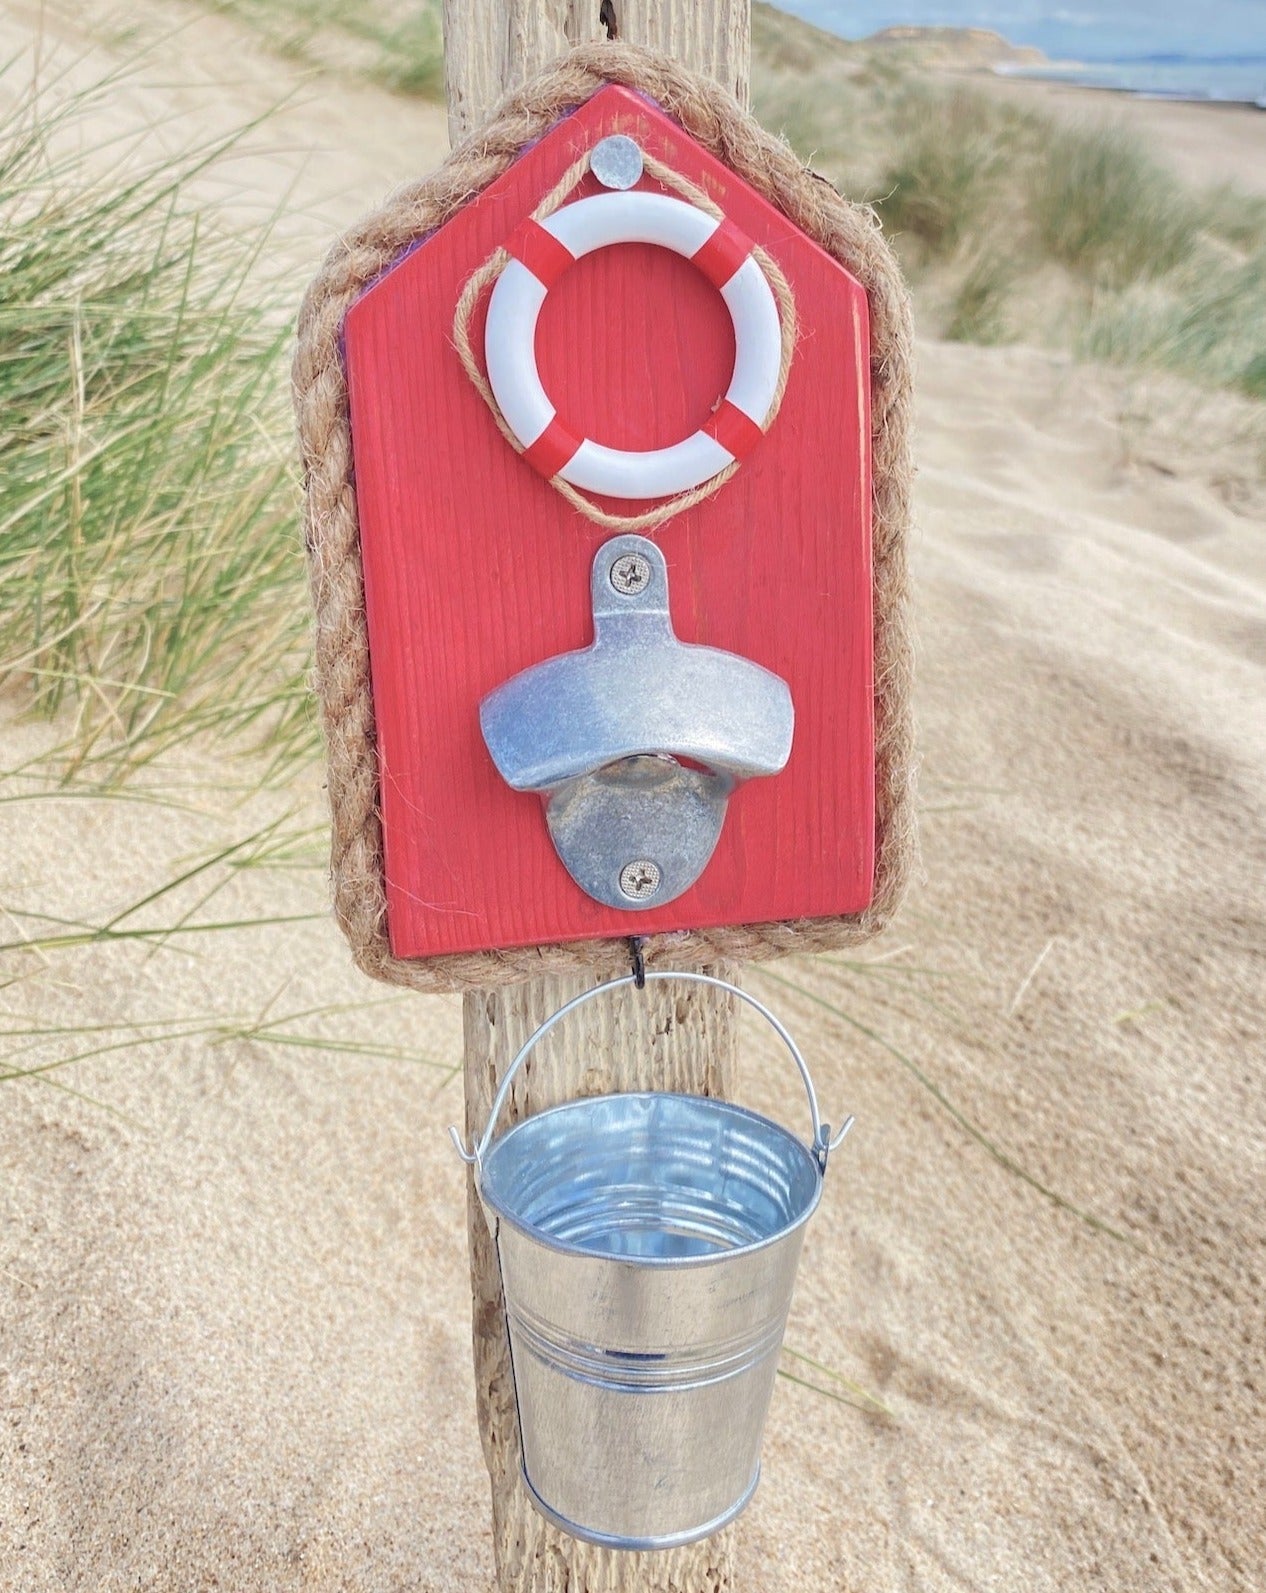 Rustic Wooden Bottle Opener with Bucket - Red, Bouy - Drift Craft by Jo